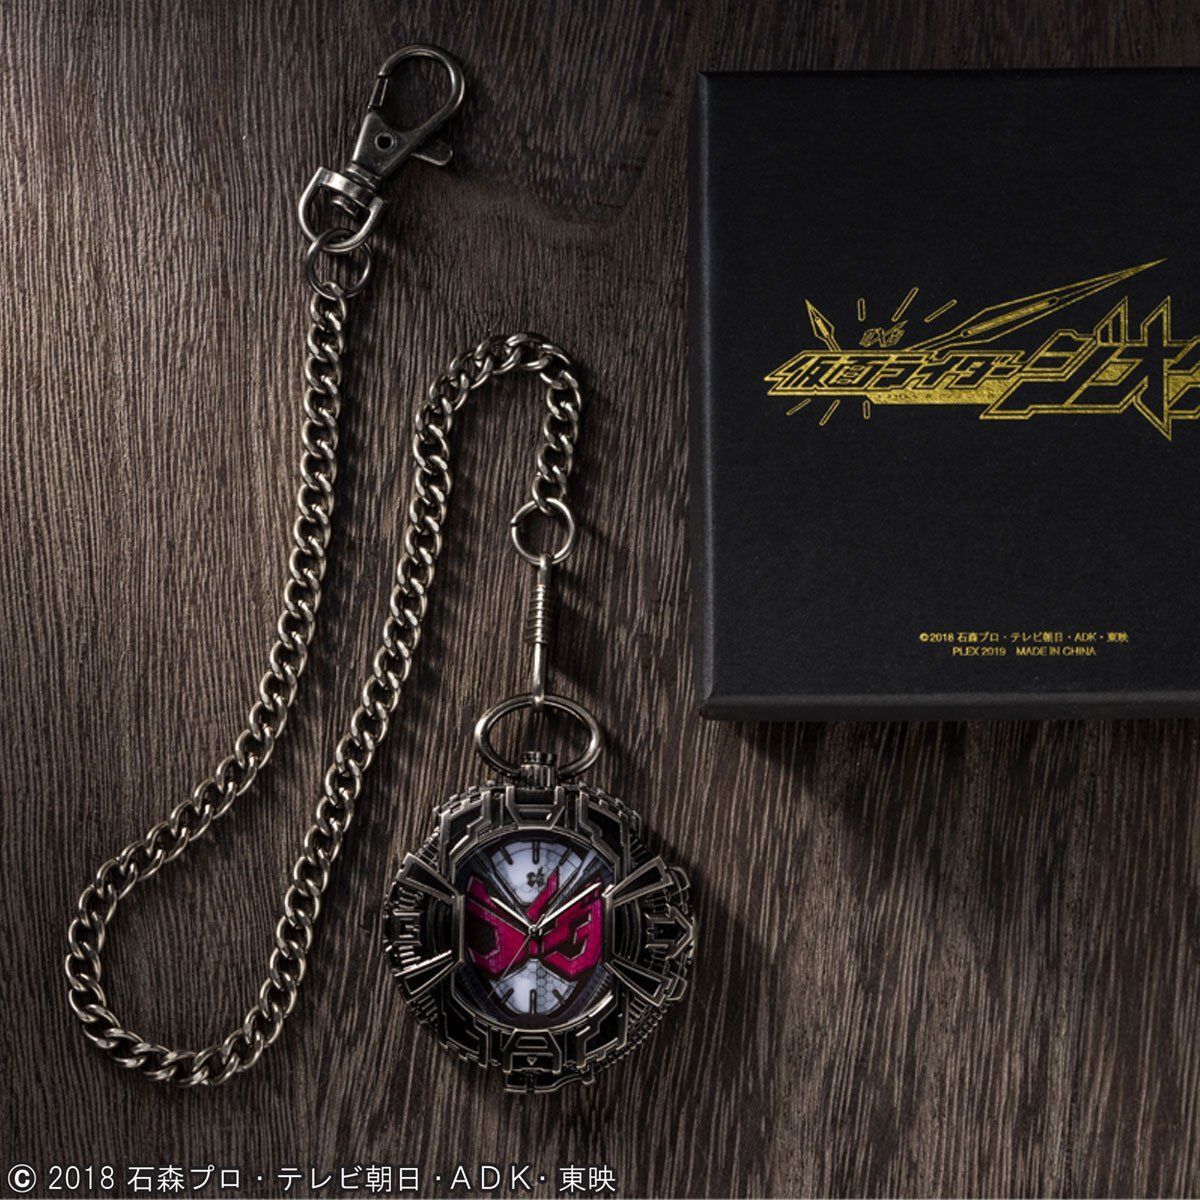 Kamen Rider Zi-O Pocket Watch